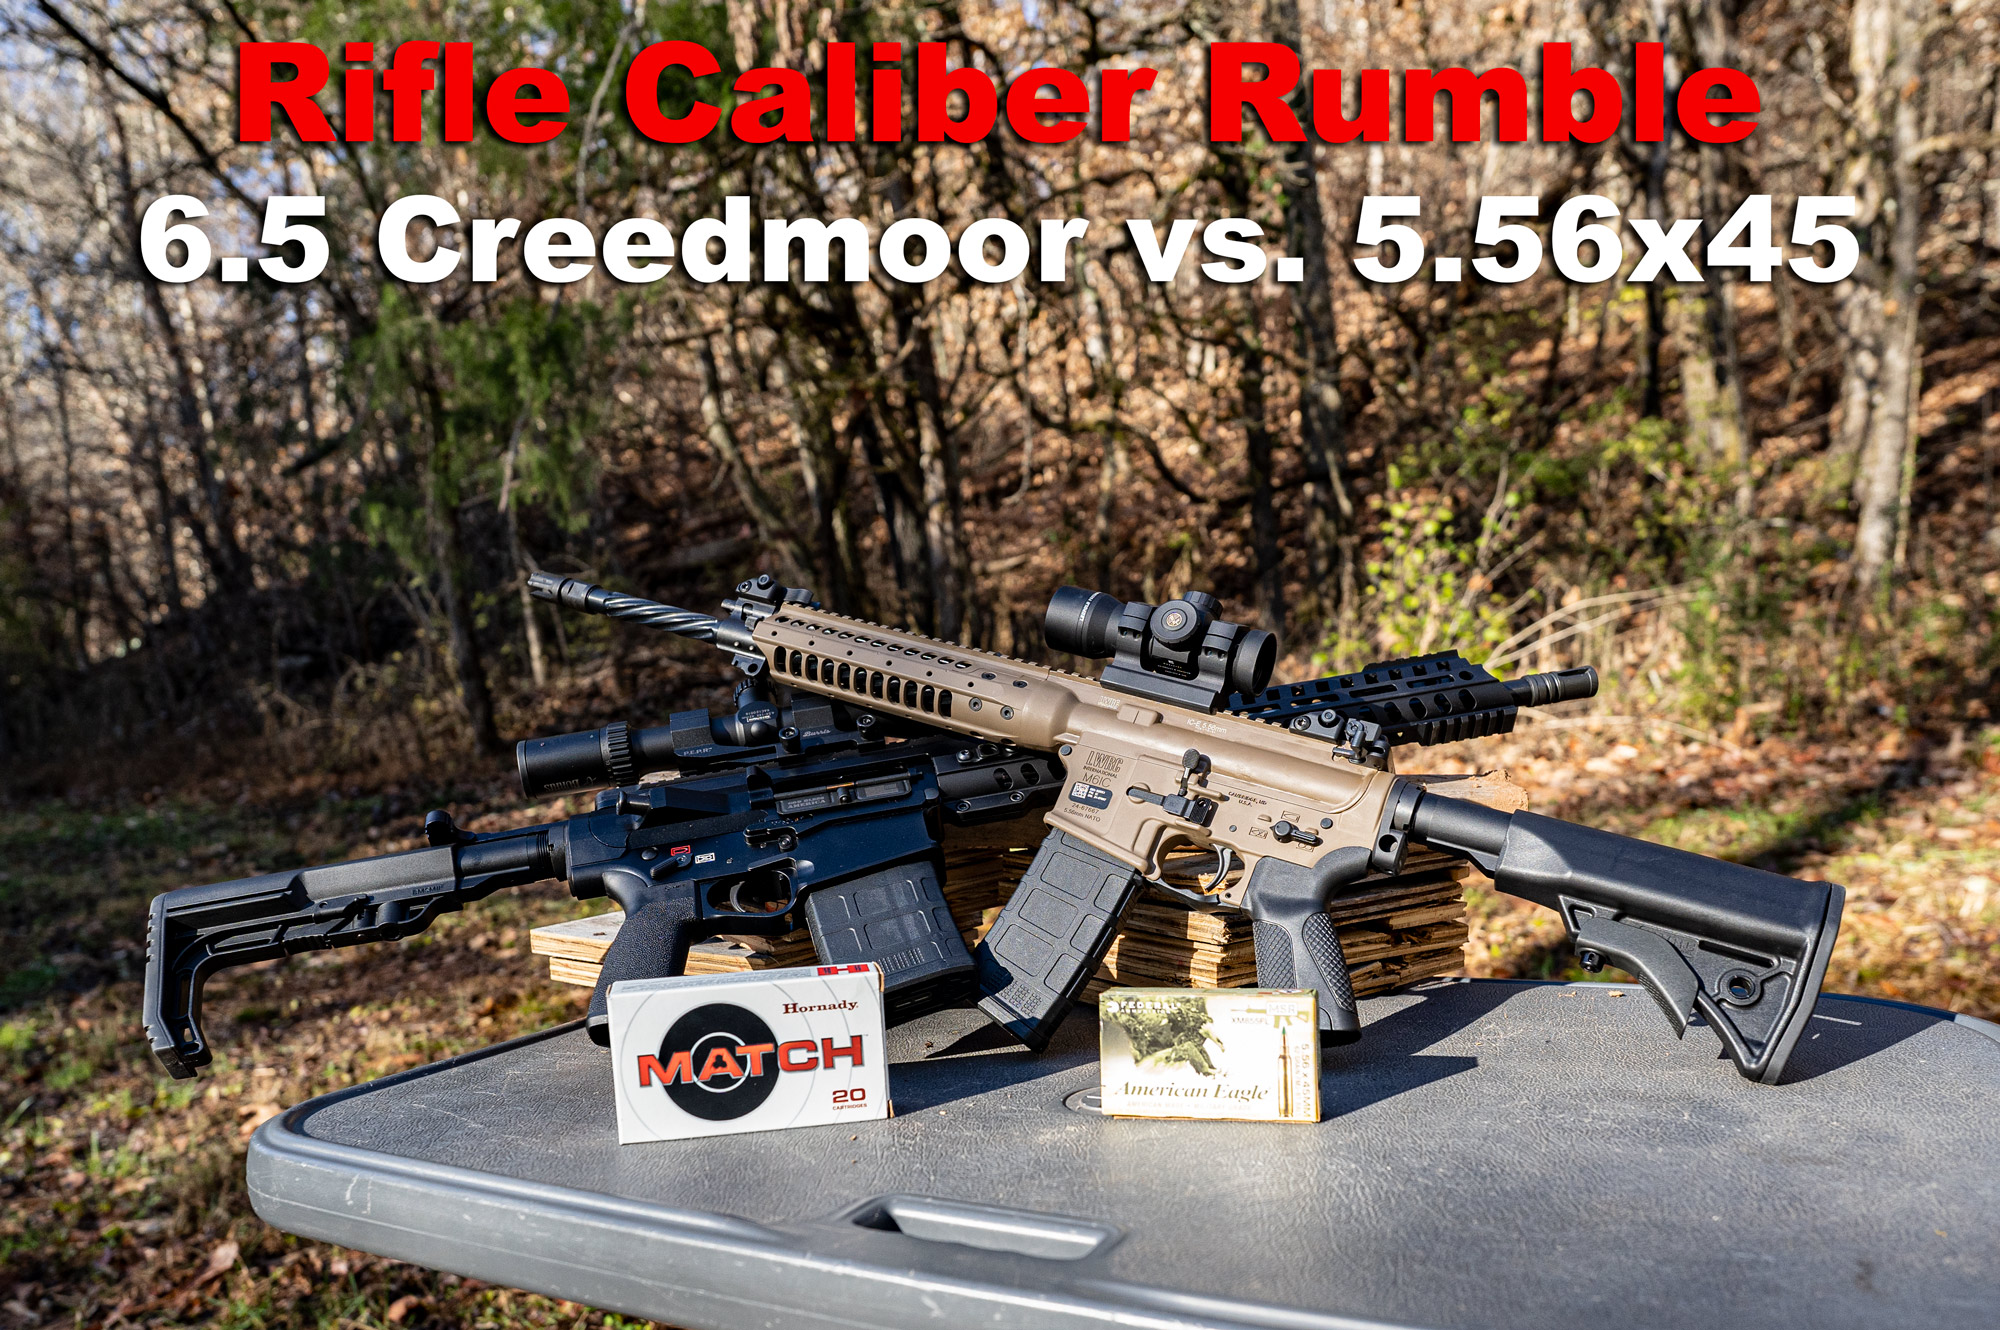 6.5 creedmoor vs 5.56 rifle on a shooting bench